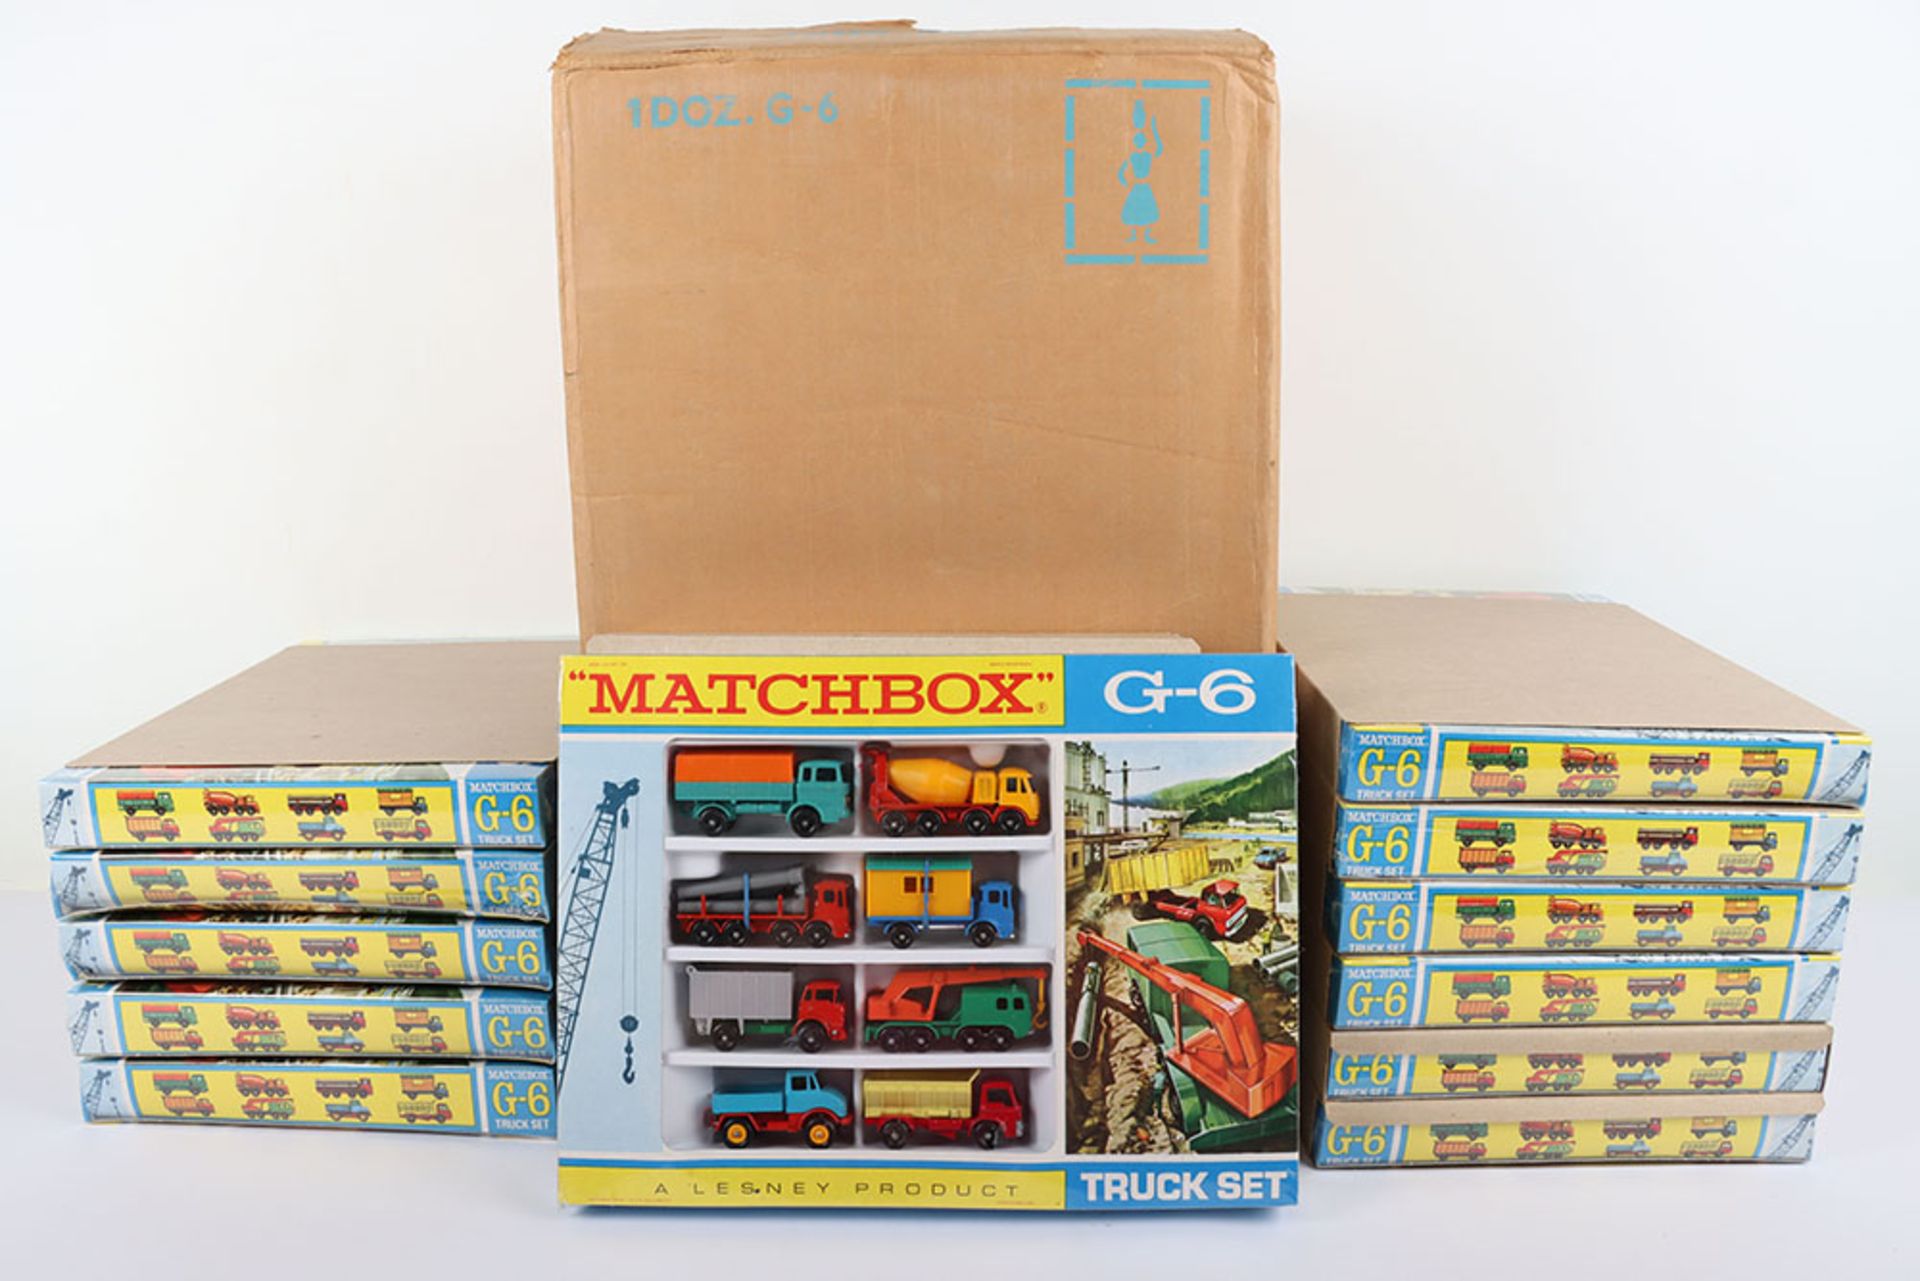 Very Rare Trade Box of Twelve Regular Wheel Matchbox Lesney G-6 Truck Gift Sets